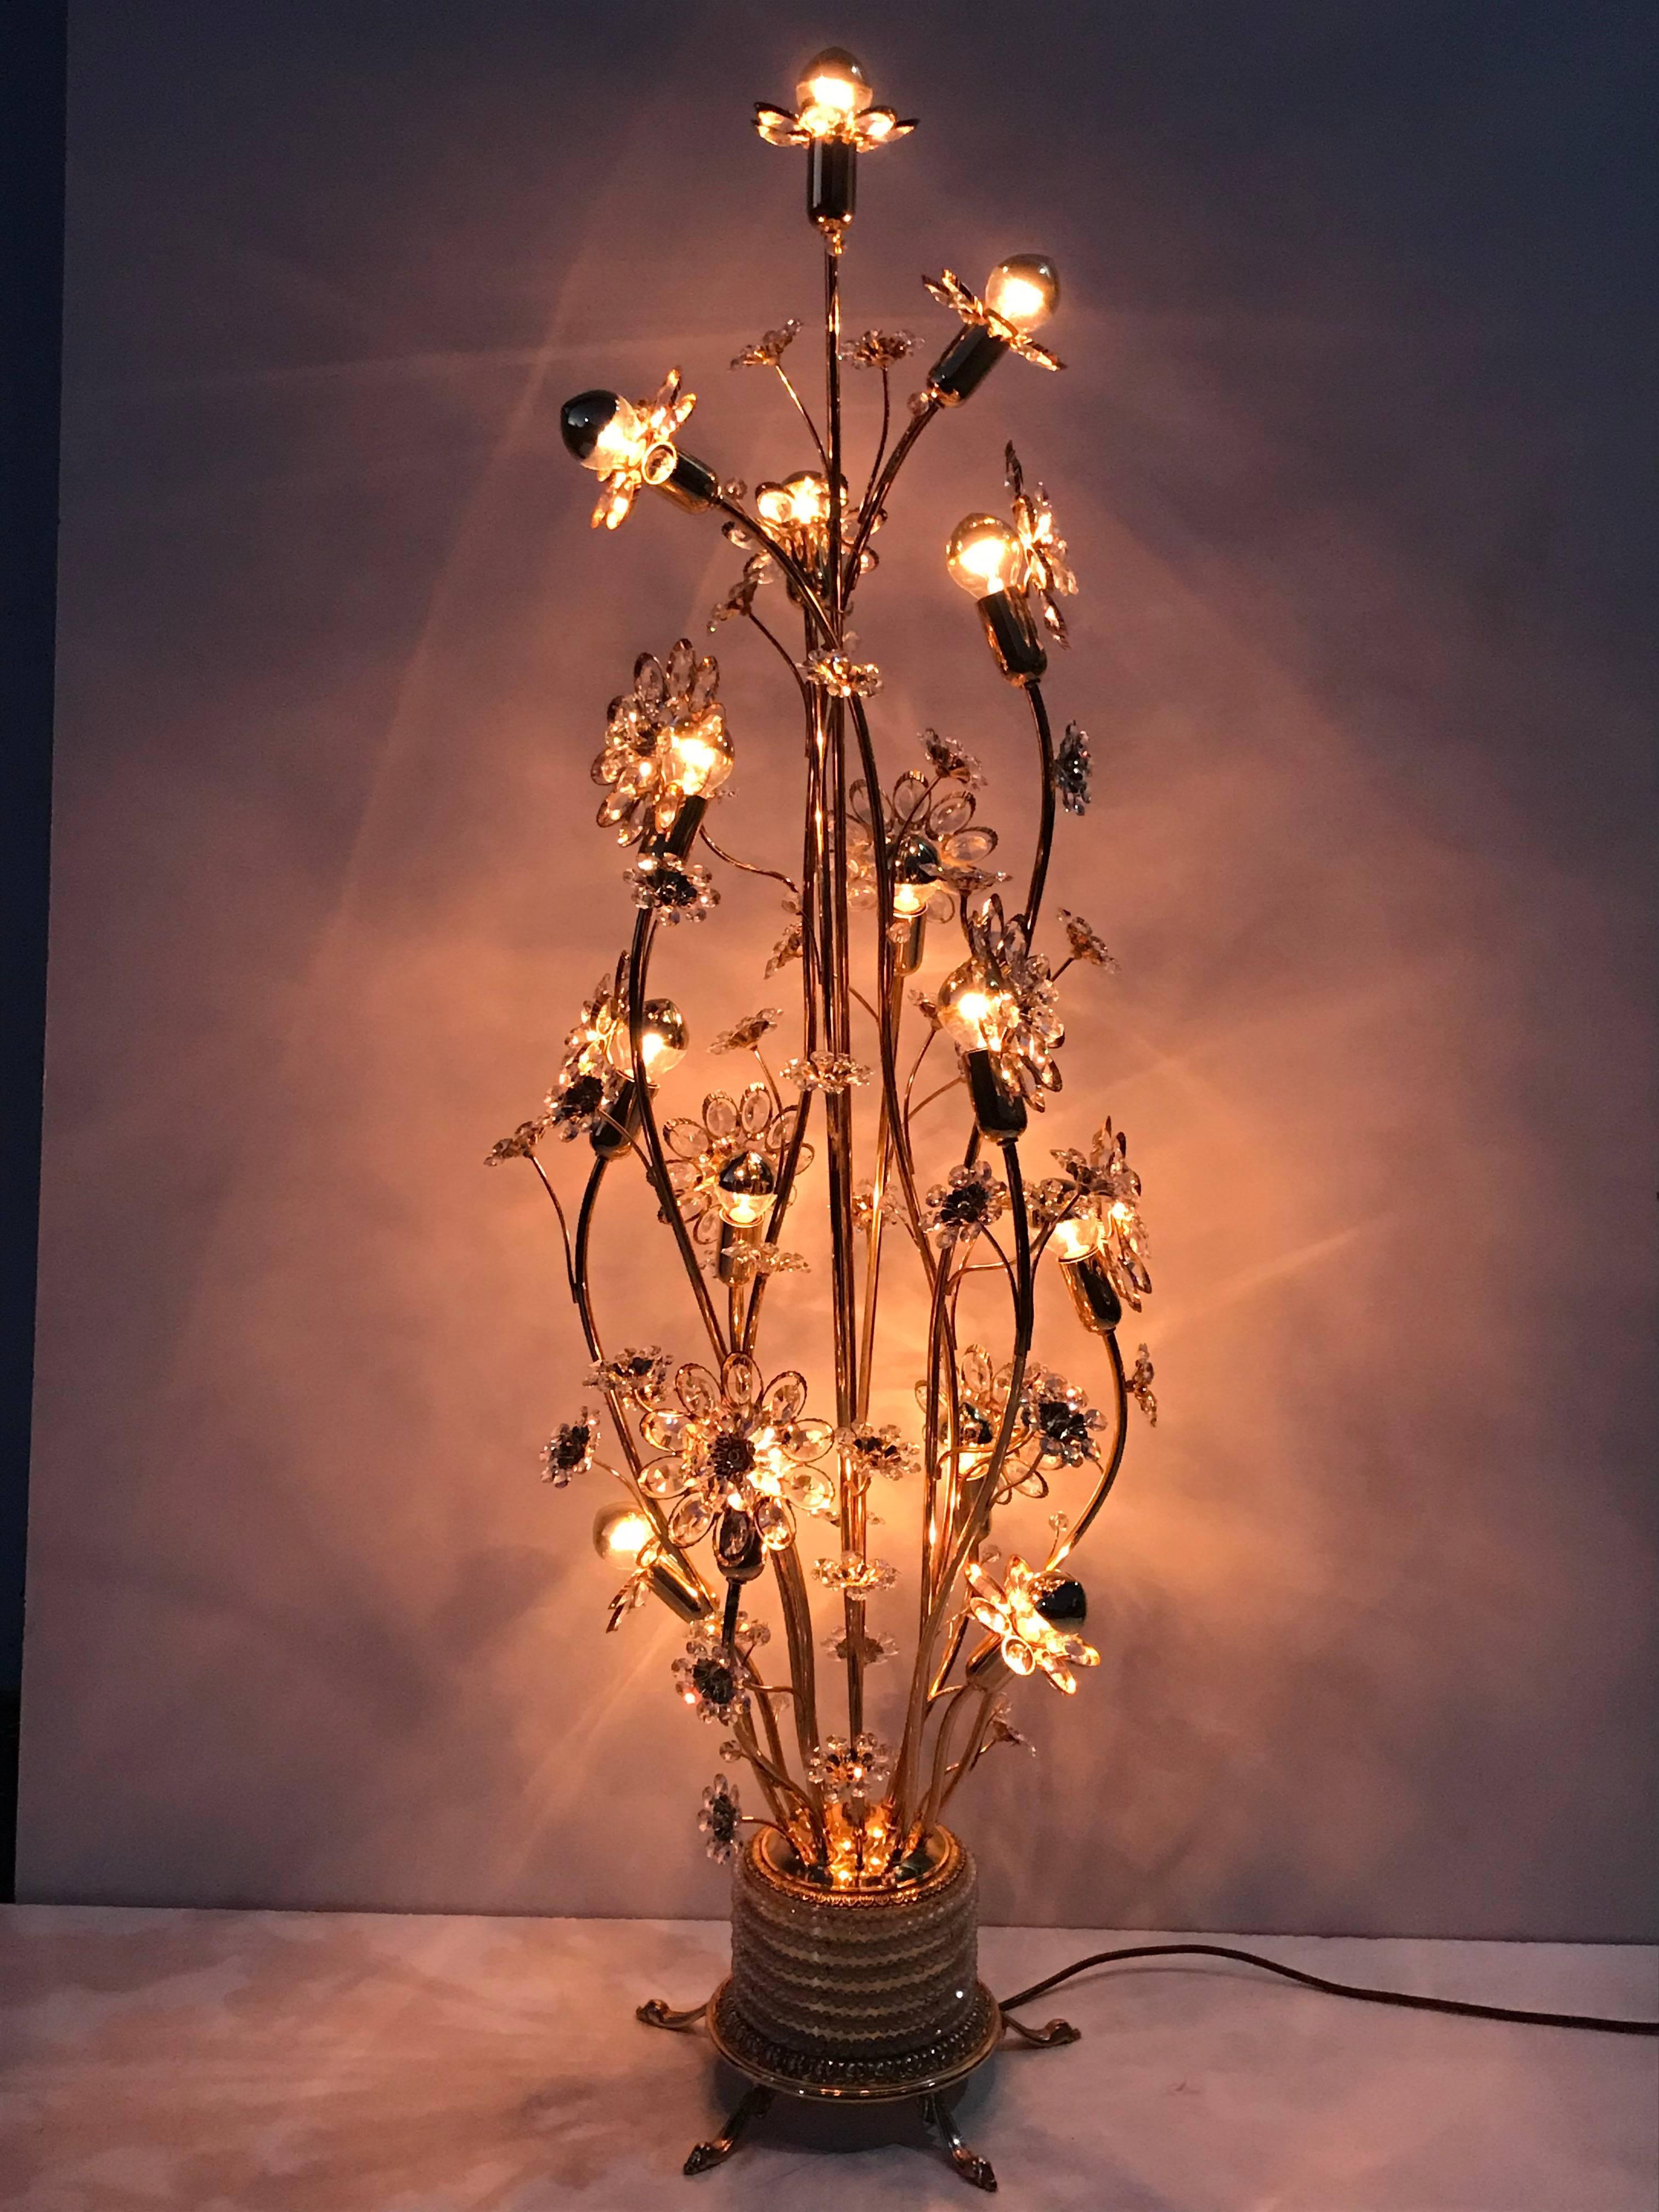 Enchanting illuminated crystal flower and brass floor lamp by Palwa
Uses up to 40watt E14 base bulbs. Photographed with 25watt bulbs.